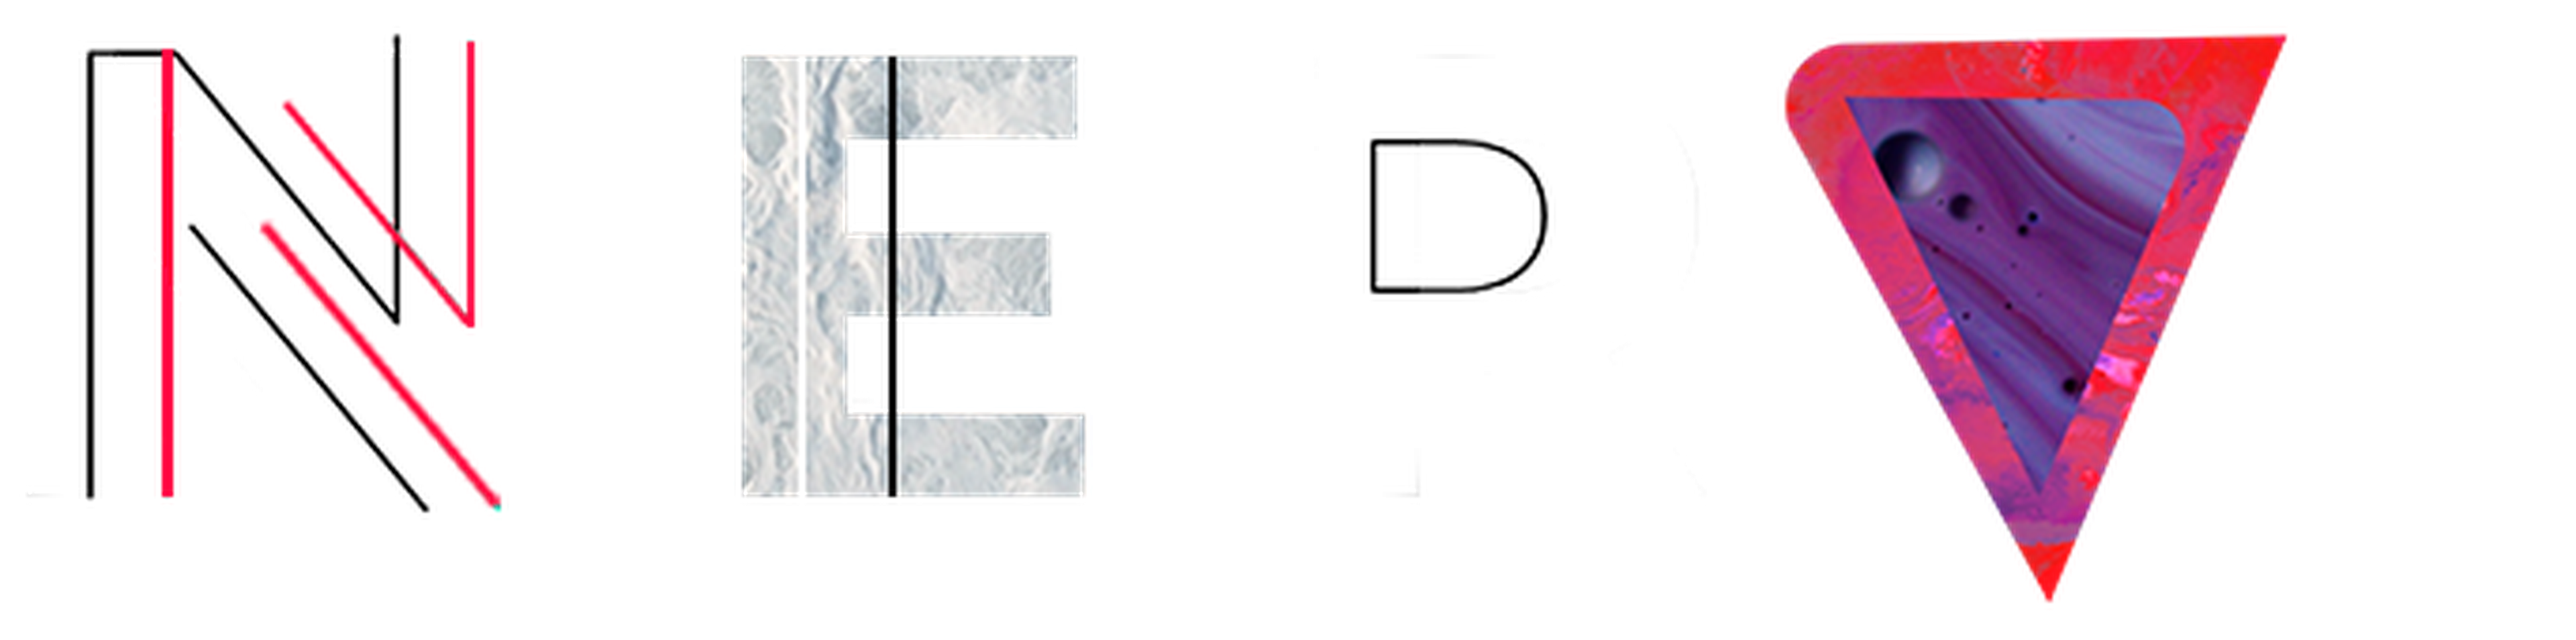 logo del programa Nervi